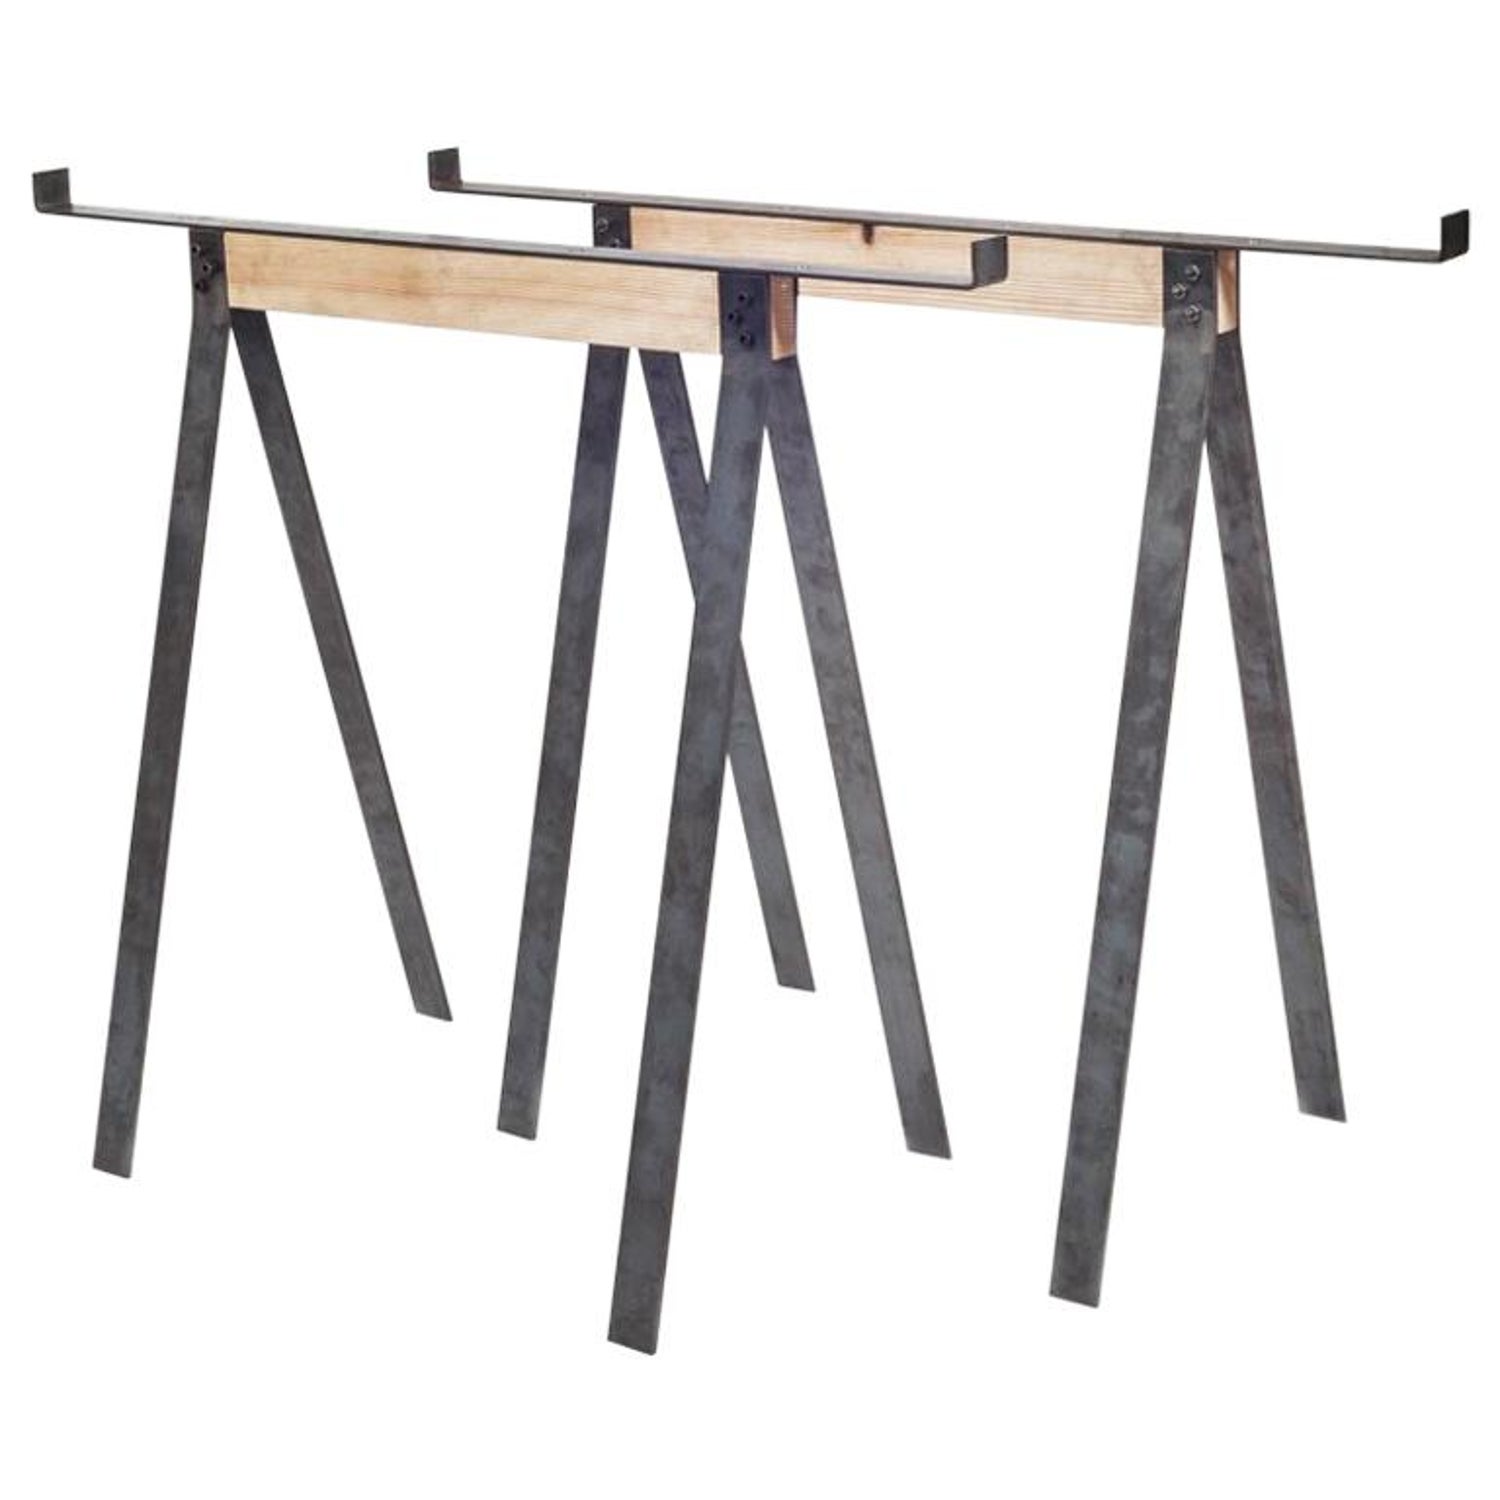 Set Of 2 Industrial Look Durable Steel Crosscut Trestle Legs For Table  Desk Or